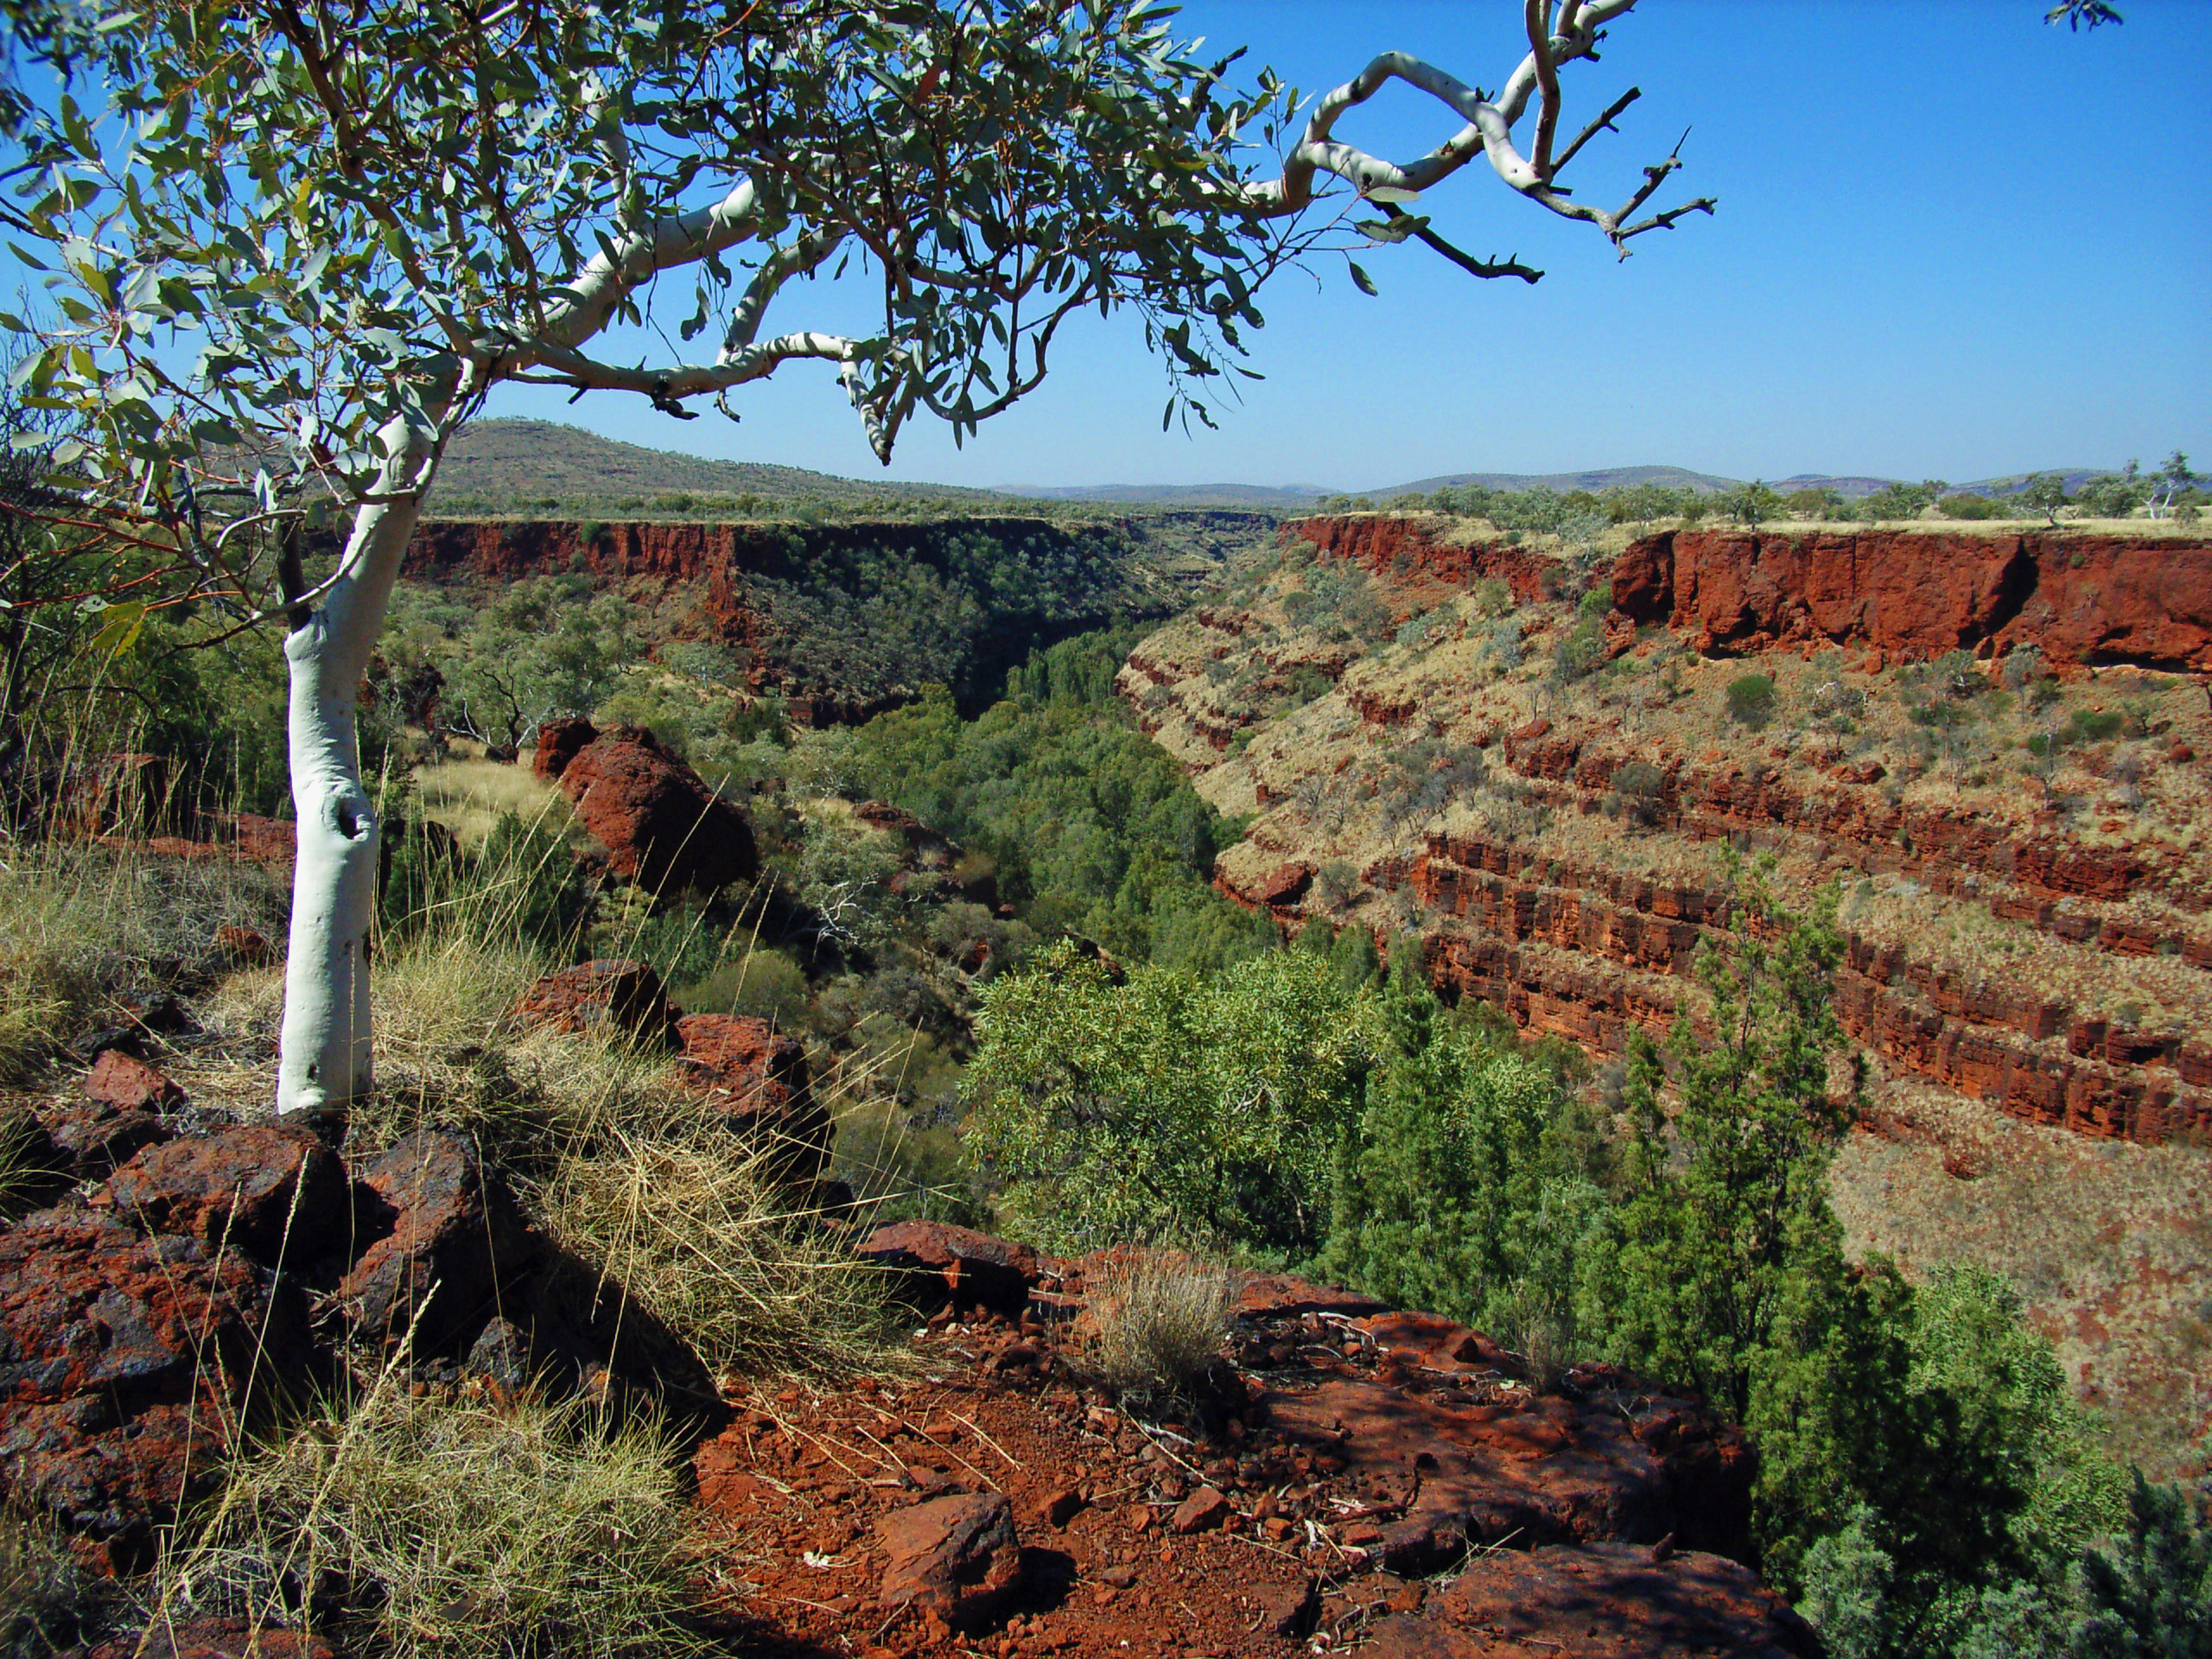 Karijini National Park, Pilbara Region, Western Australia, Dales Gorge. Gypsy Denise, CC BY-SA 4.0 via Wikimedia Commons.